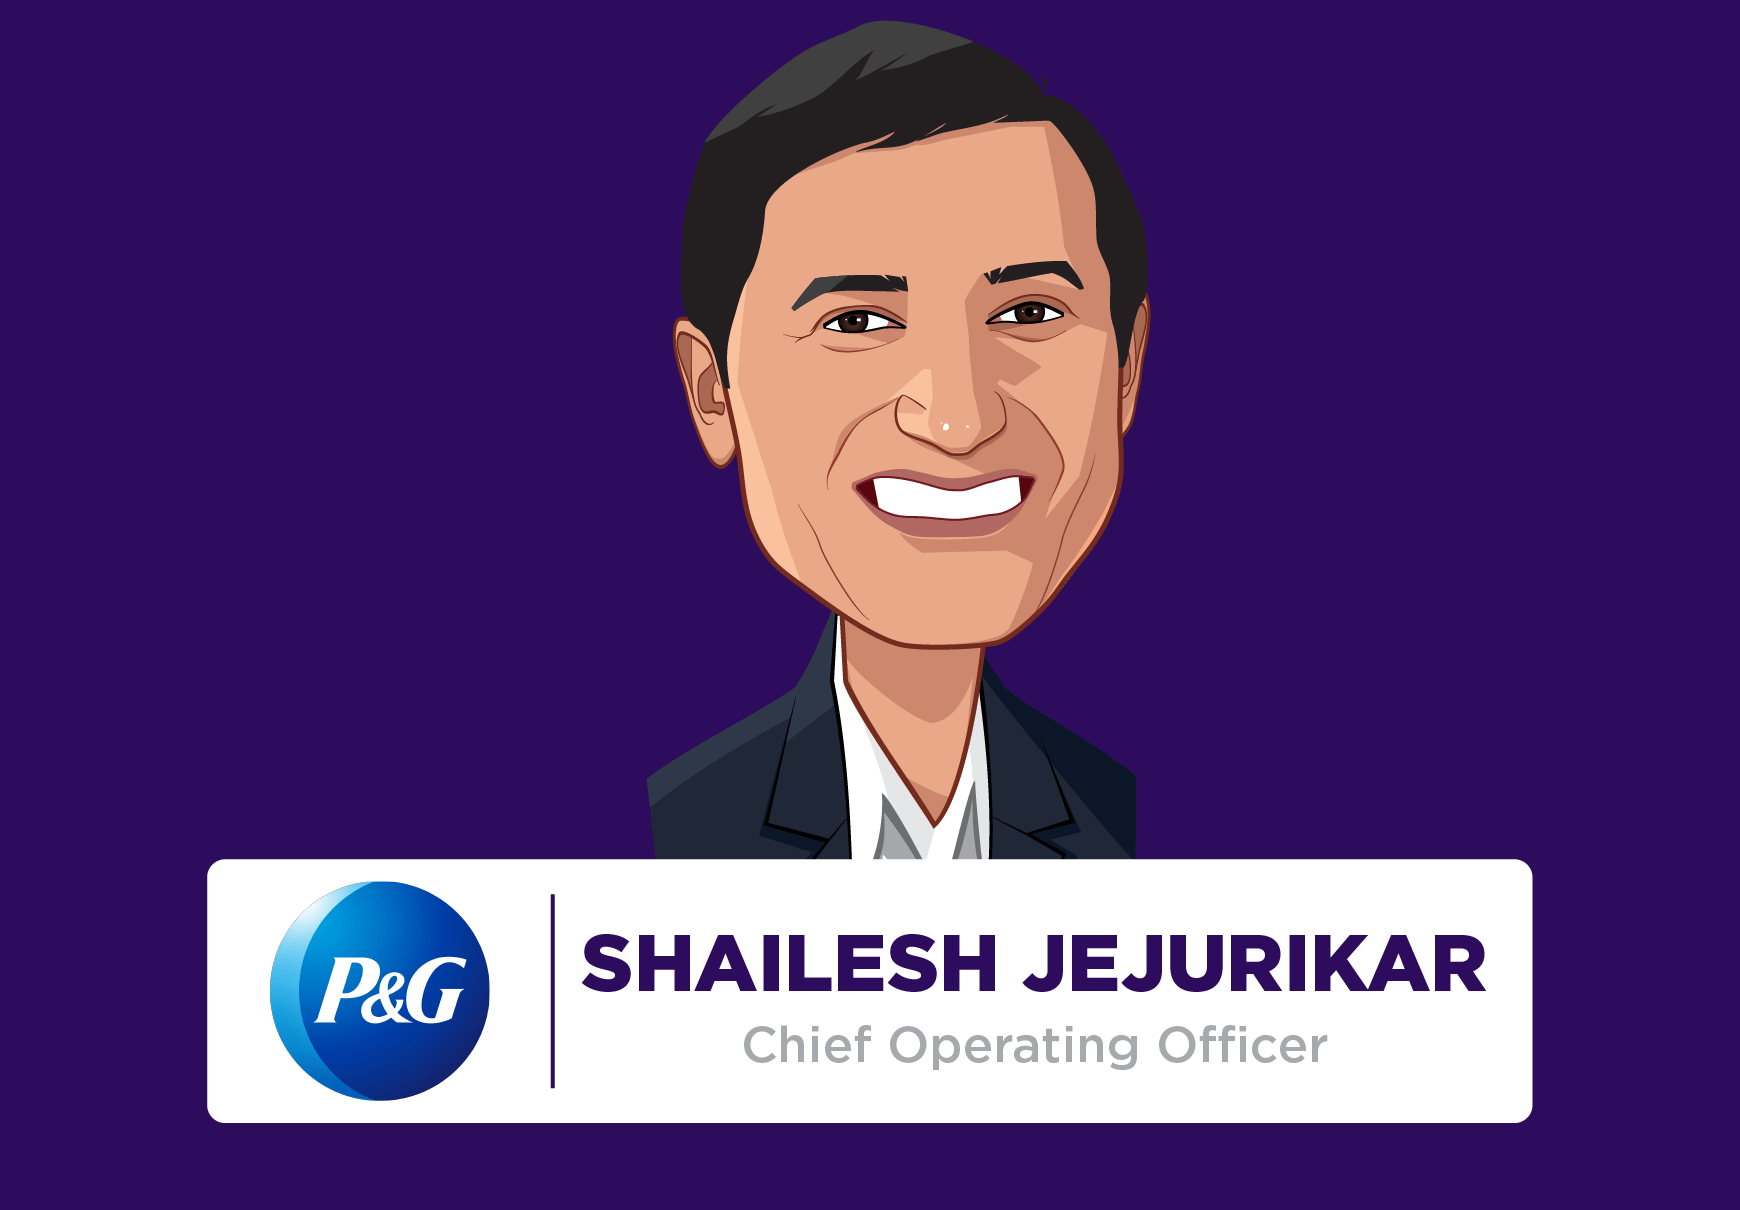 Shailesh Jejurikar, Chief Operating Officer, P&G